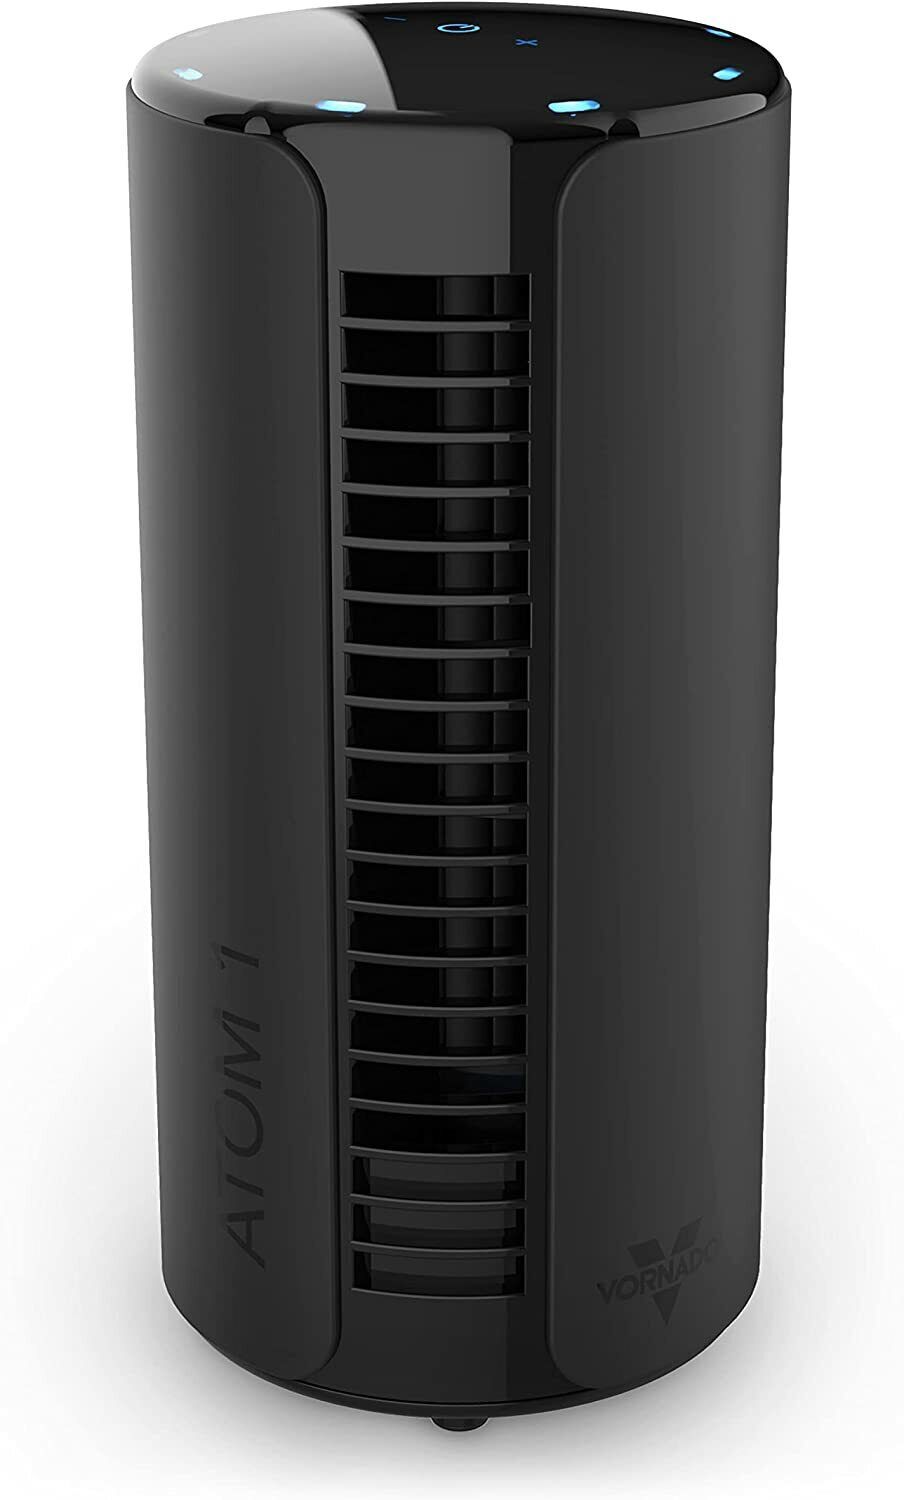 Vornado ATOM 1 Compact 4 Speed Oscillating Tower Air Circulator Fan - $118.99